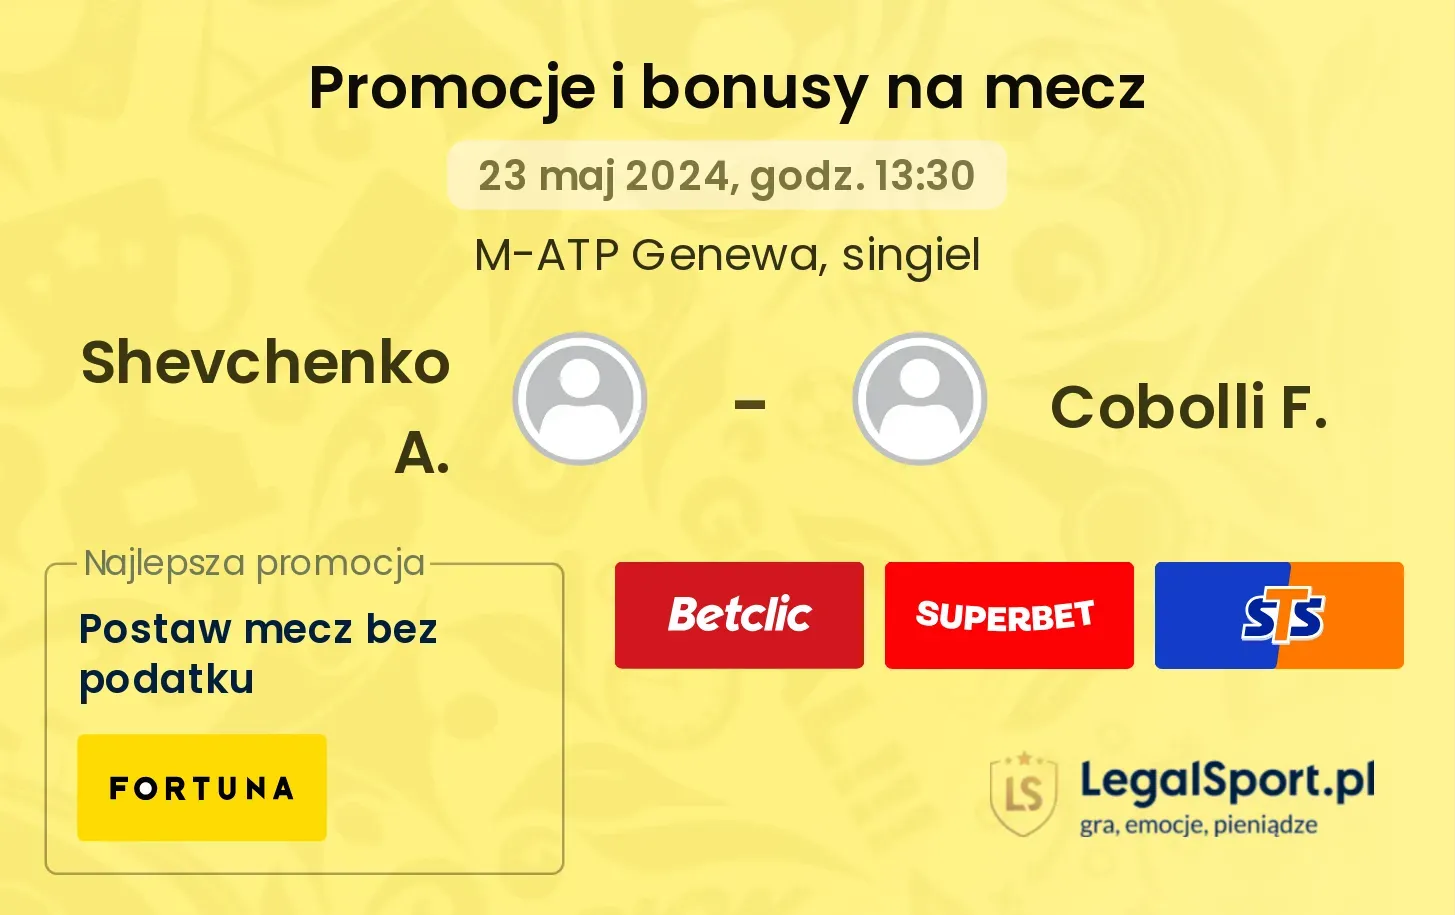 Shevchenko A. - Cobolli F. promocje bonusy na mecz